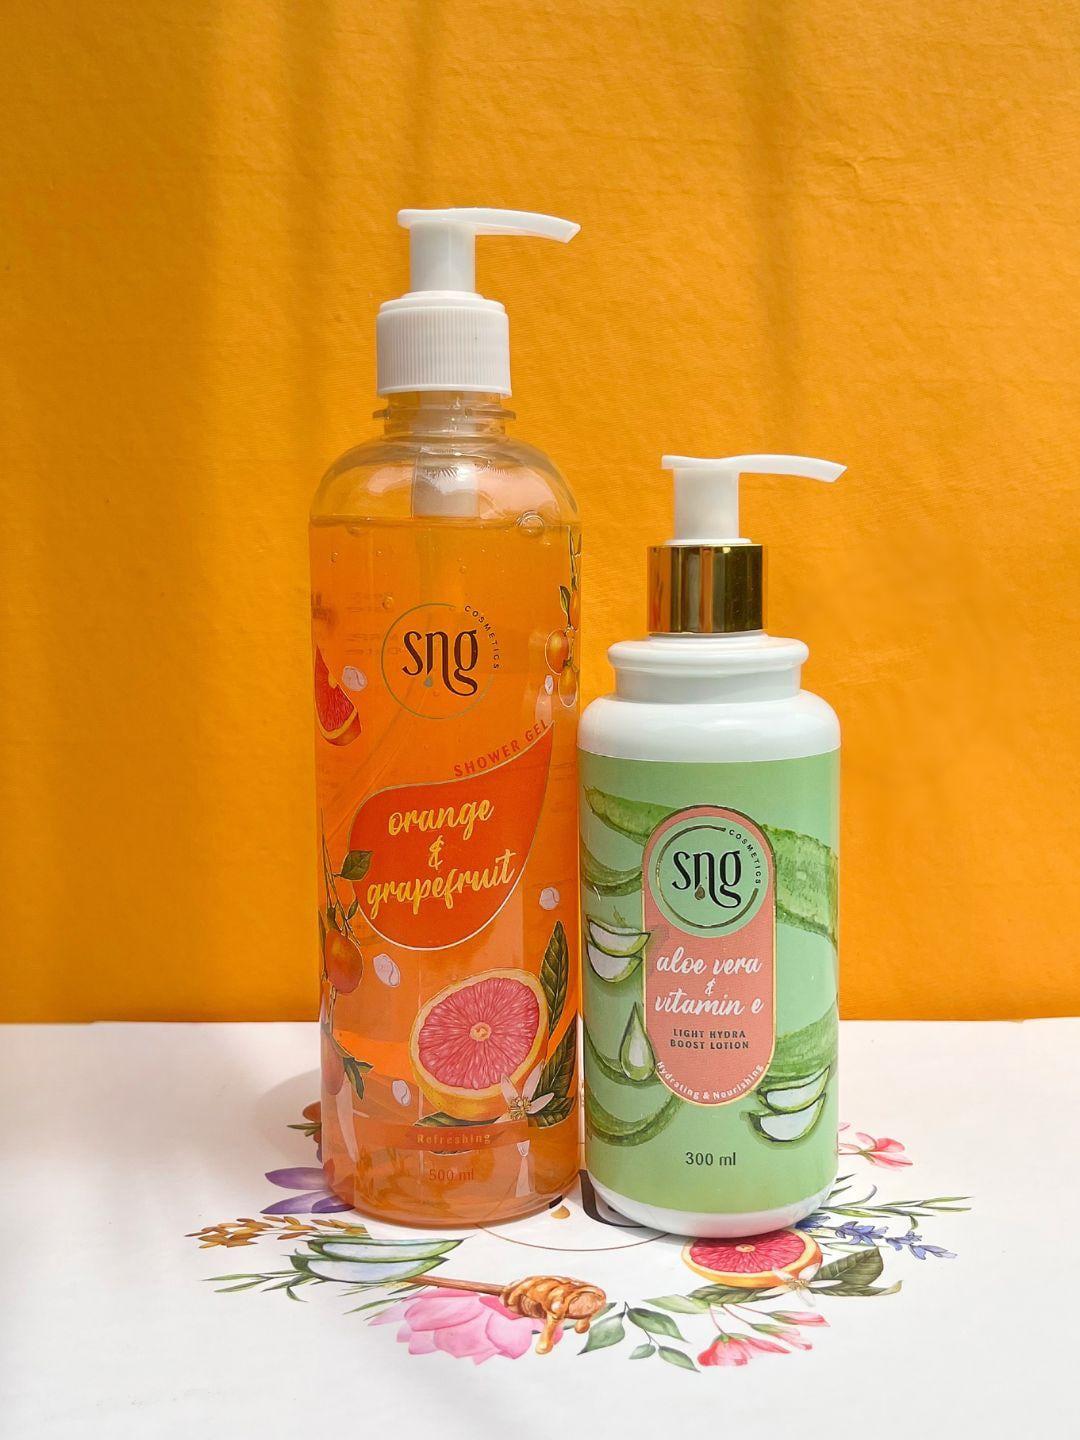 sng cosmetics orange-grapefruit shower gel 500ml with aloevera-vitamin e body lotion 300ml